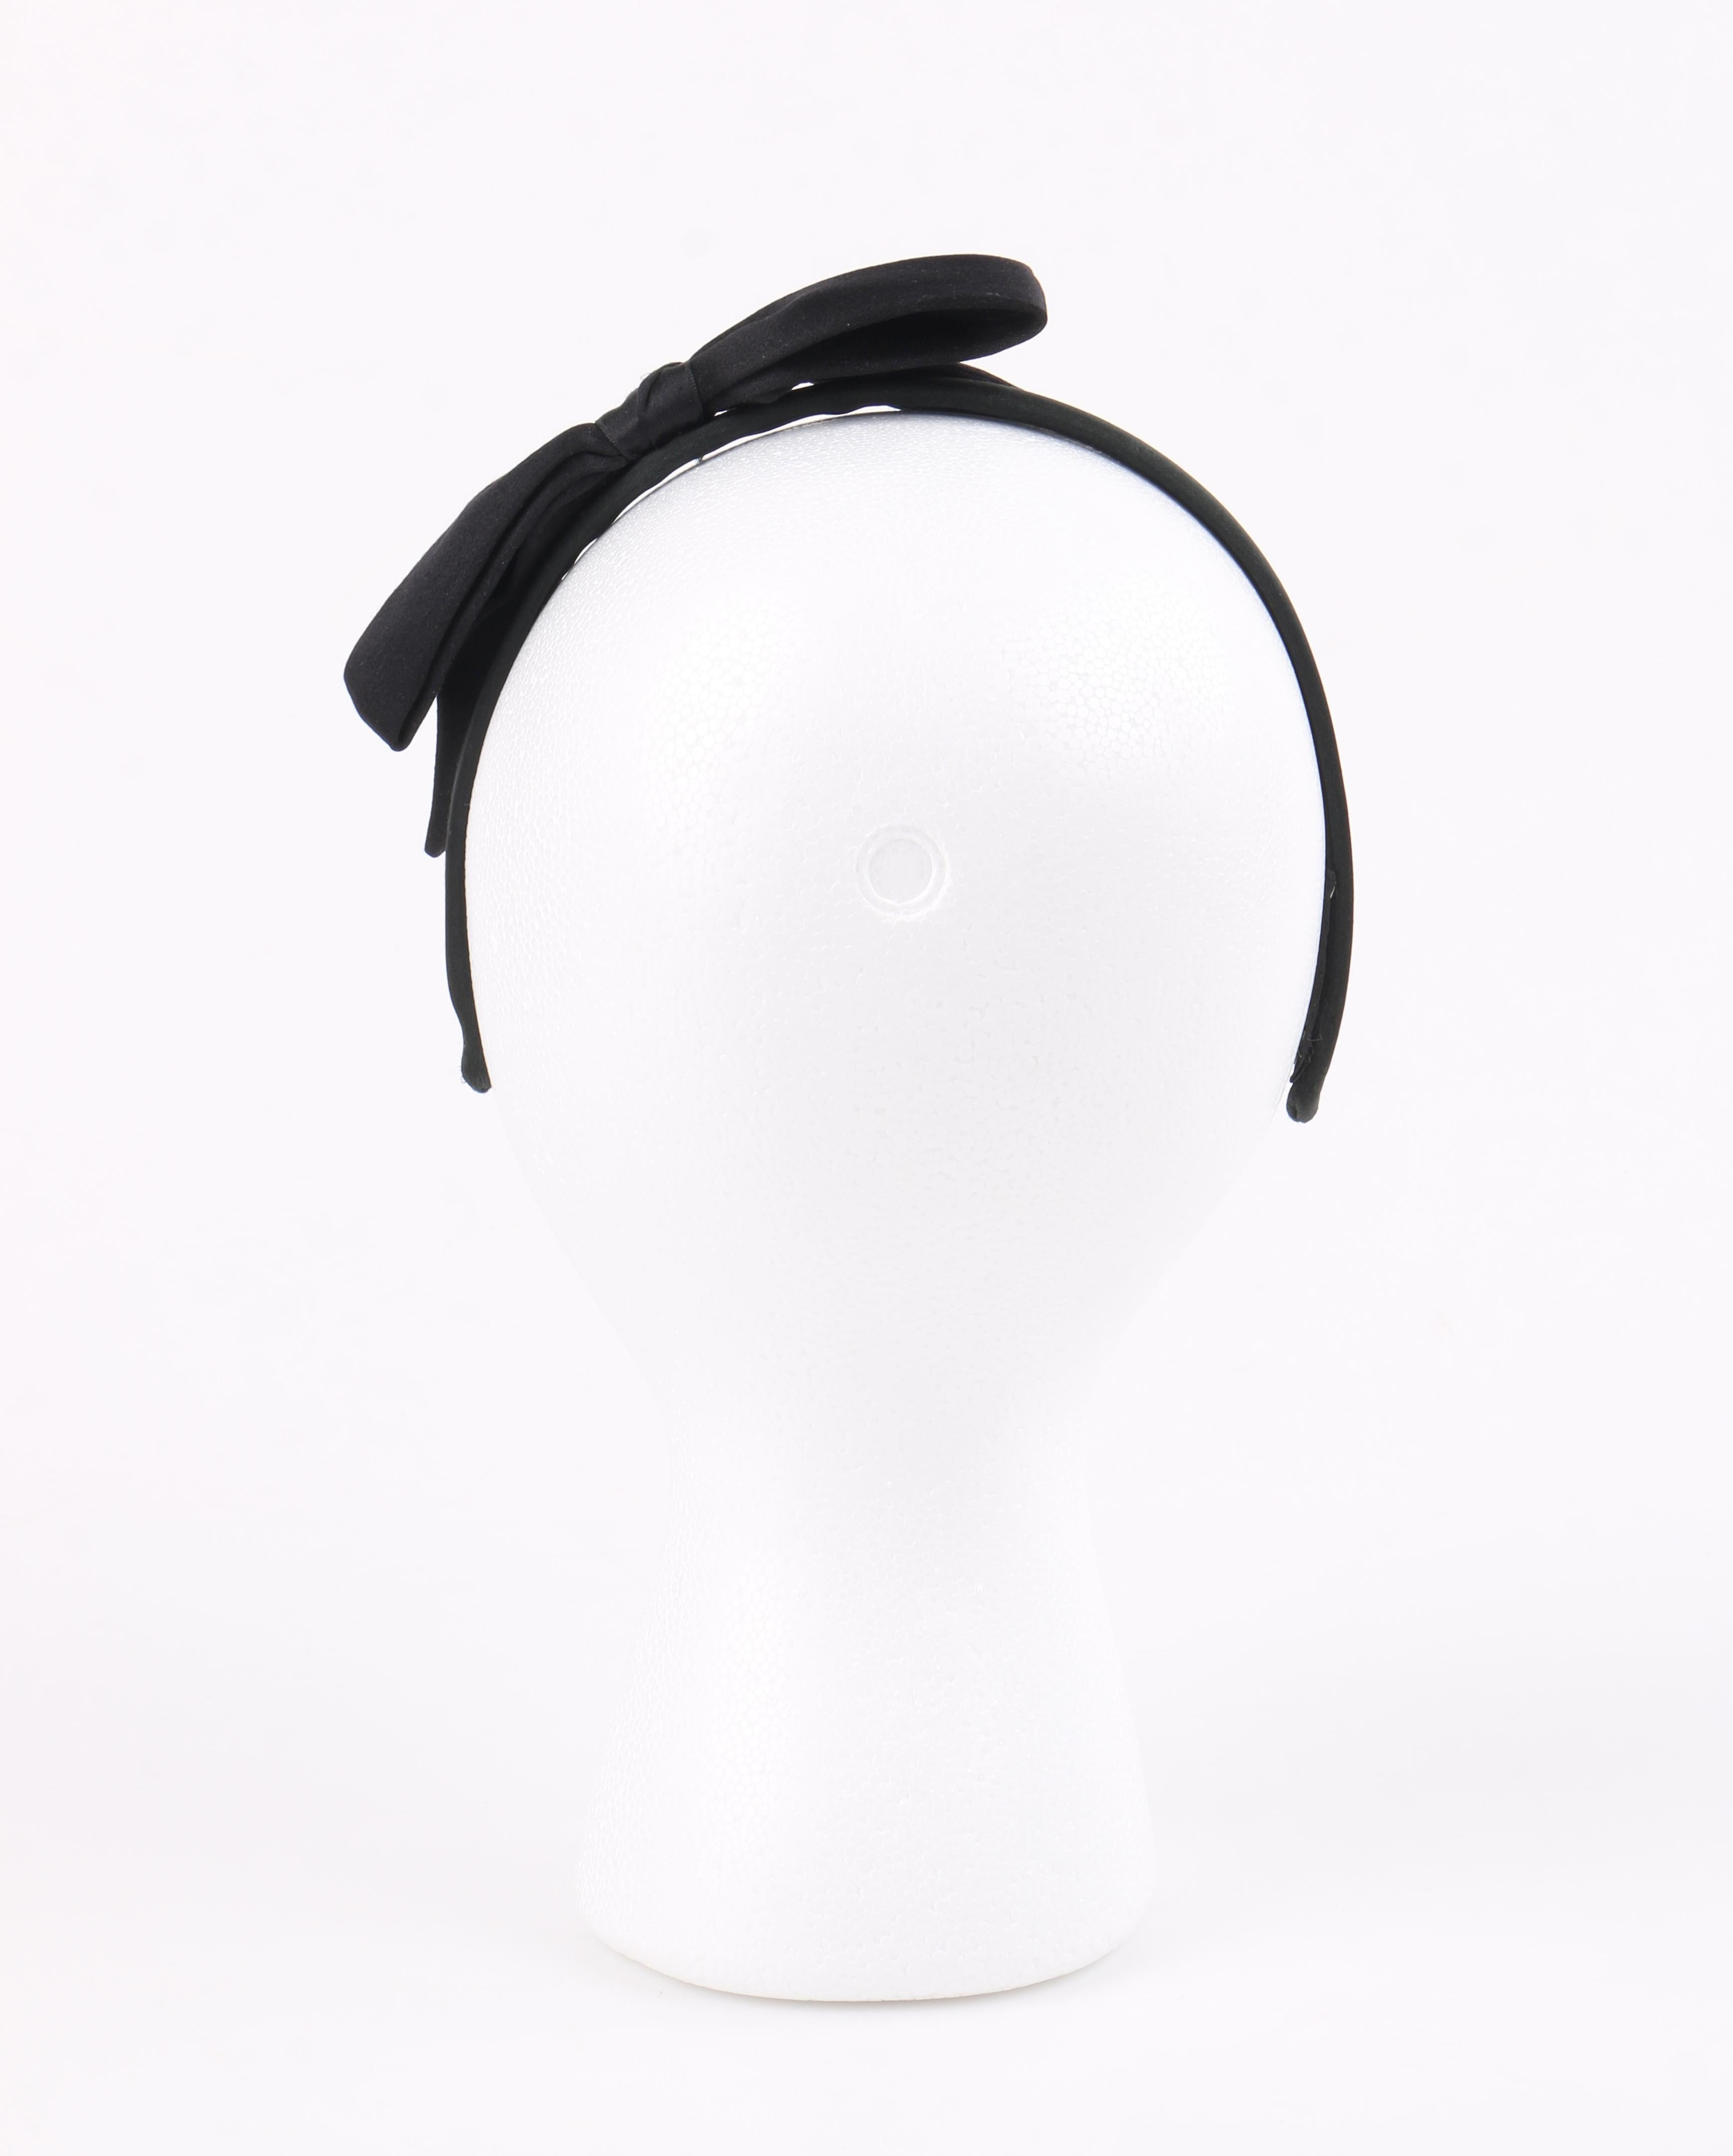 Women's CHANEL Black Satin Silk Narrow Classic Bow Covered Structured Headband Headpiece